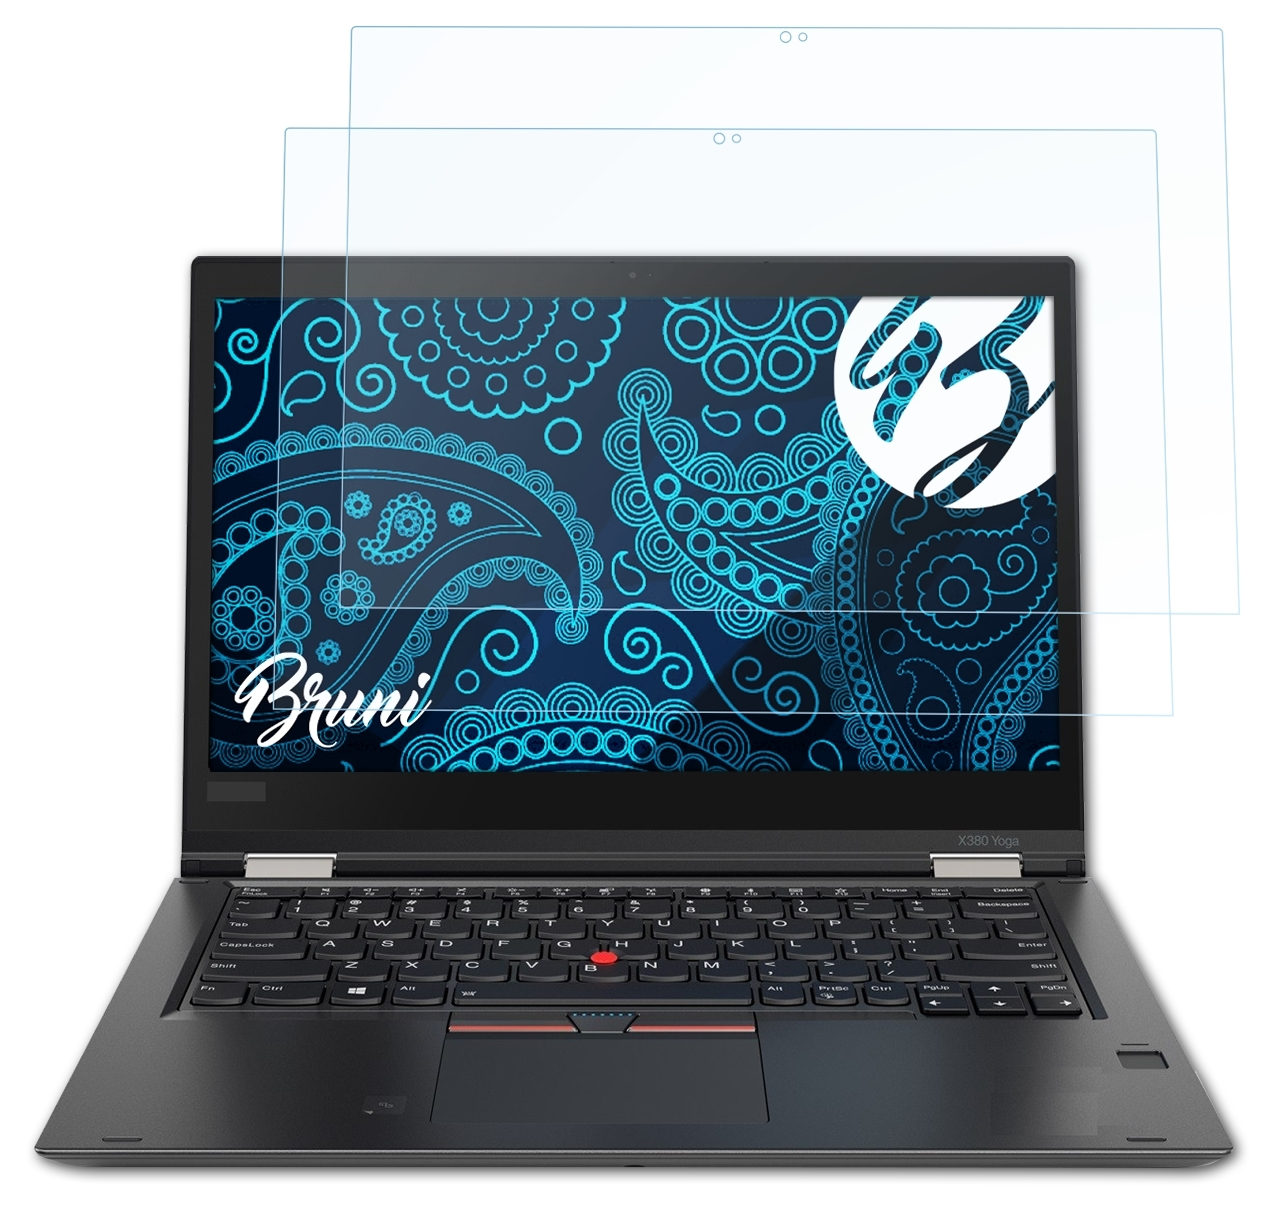 BRUNI 2x Yoga) Basics-Clear Schutzfolie(für ThinkPad X380 Lenovo